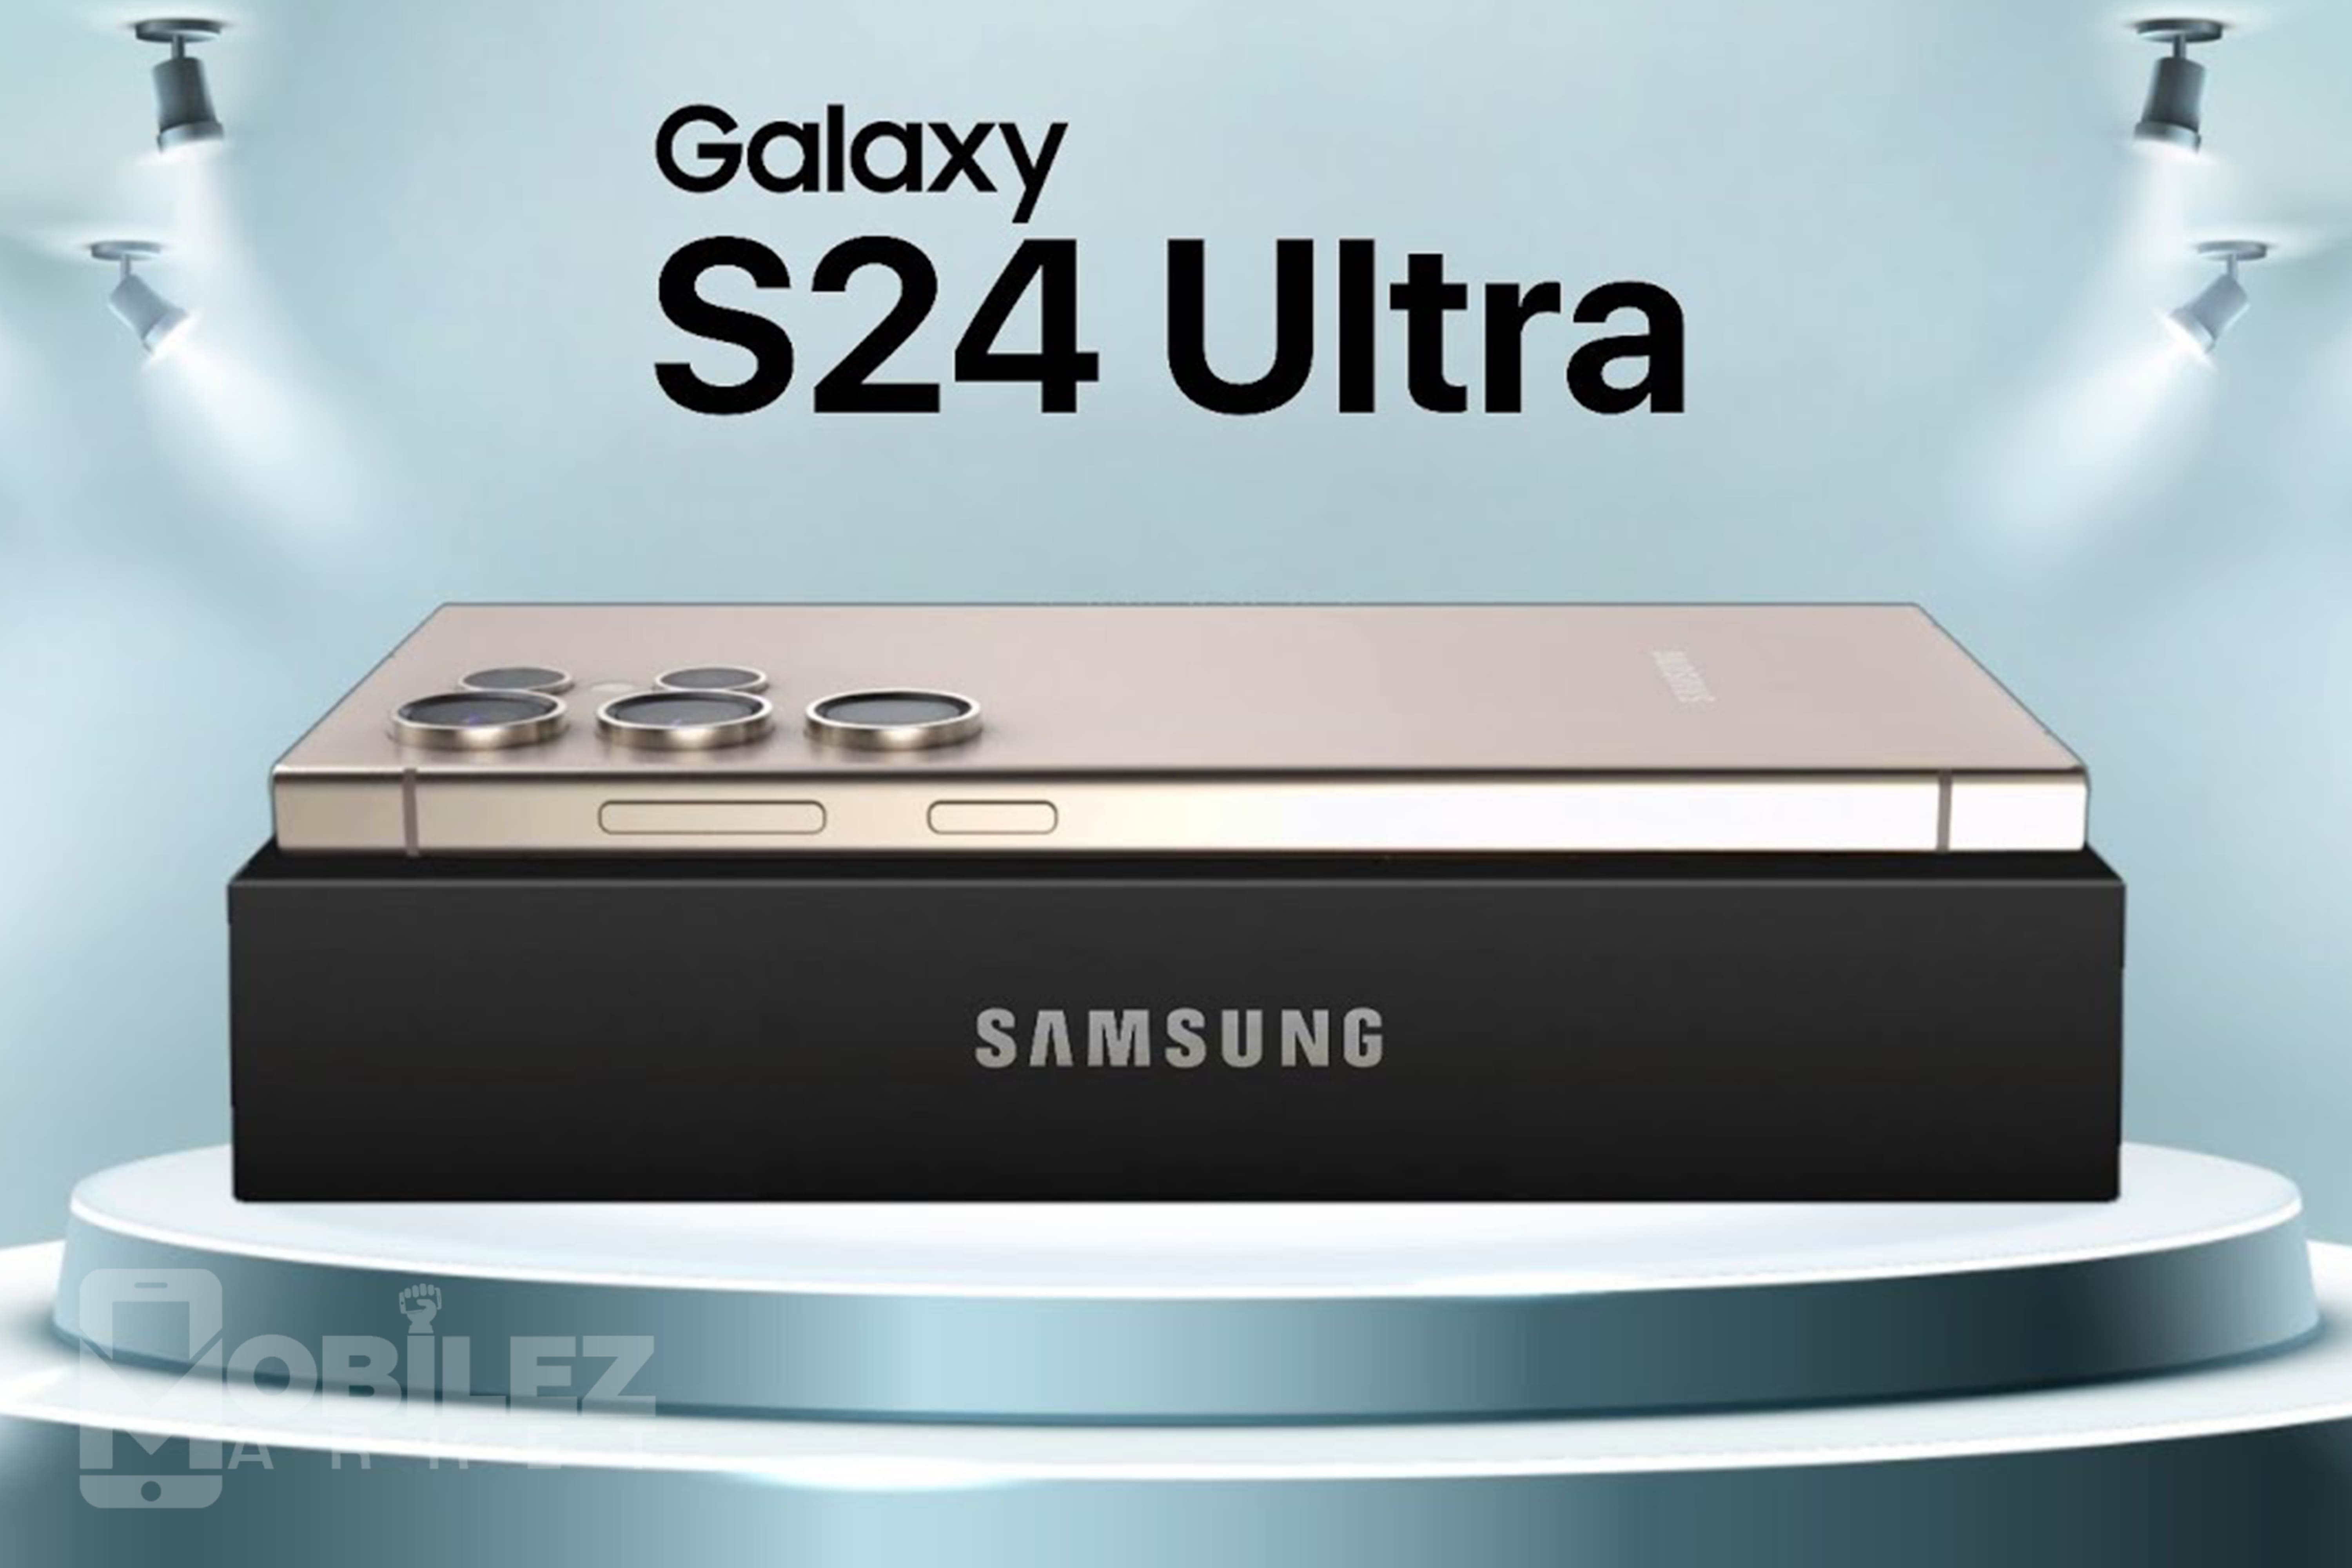 Samsung Galaxy S24 Ultra Price In Karachi | Samsung Galaxy S24 Ultra Price Karachi